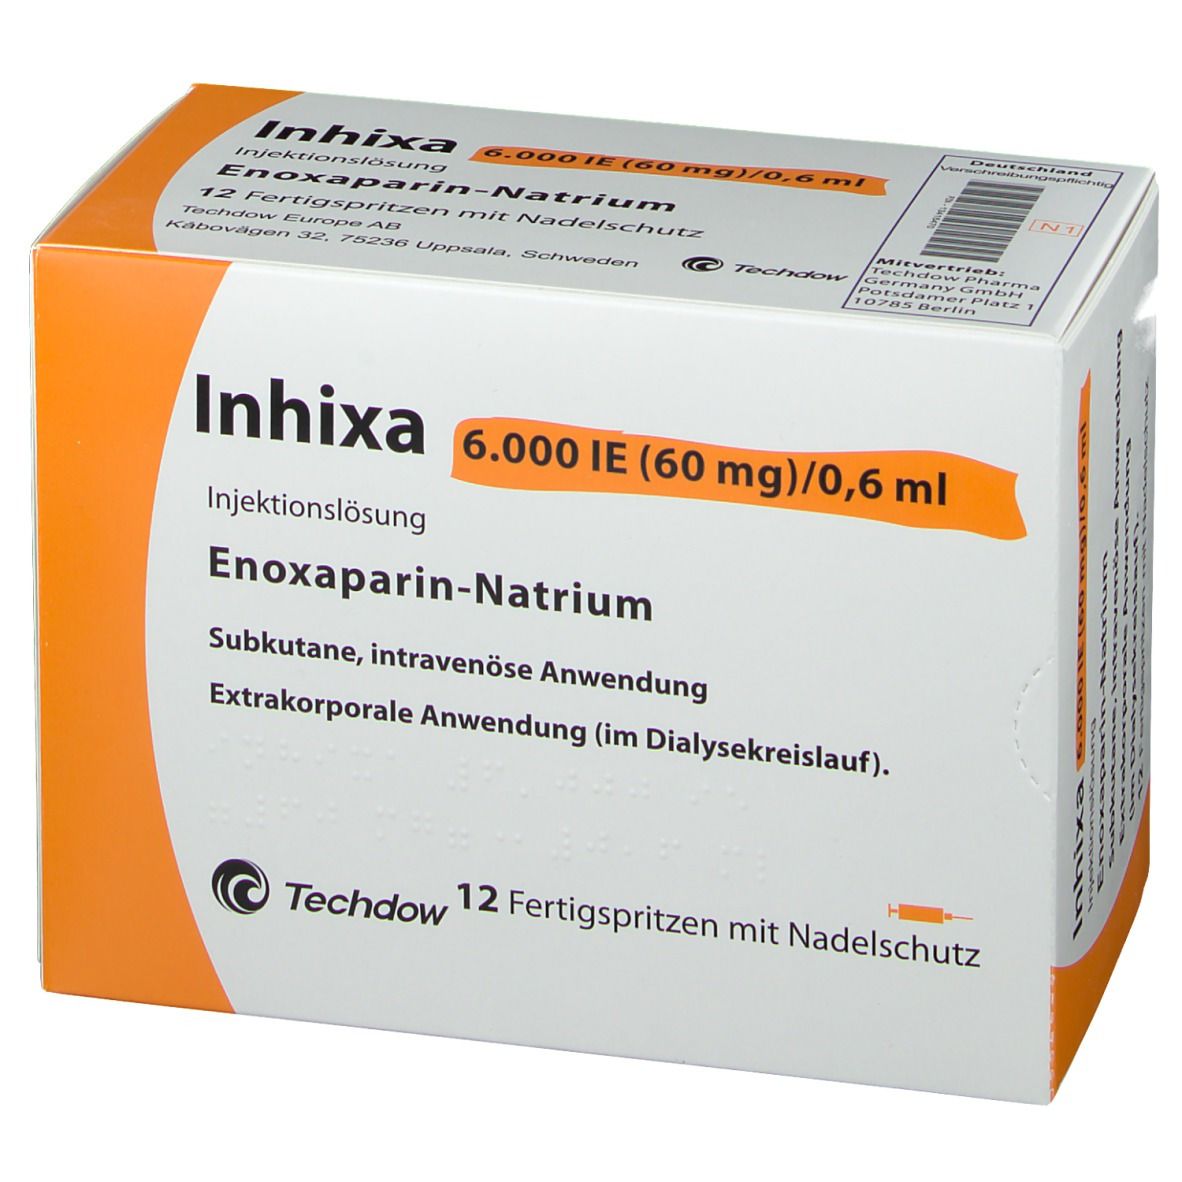 Inhixa 6.000 IE 60 mg/0,6 ml